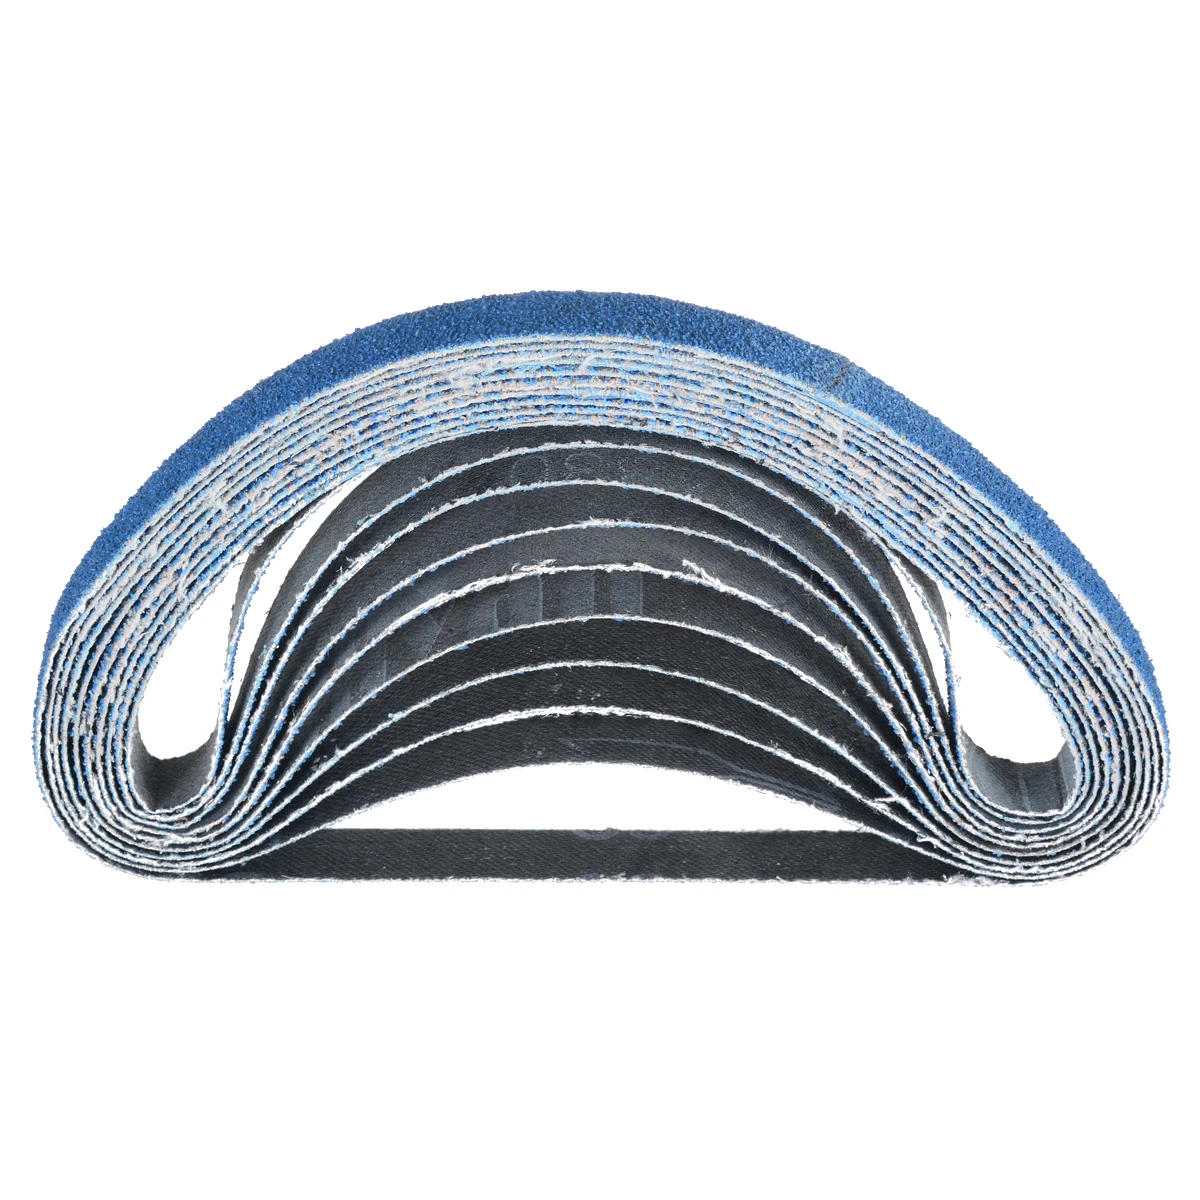 13mm x 457mm Zirconium Sanding Belts 40 Mixed Belts